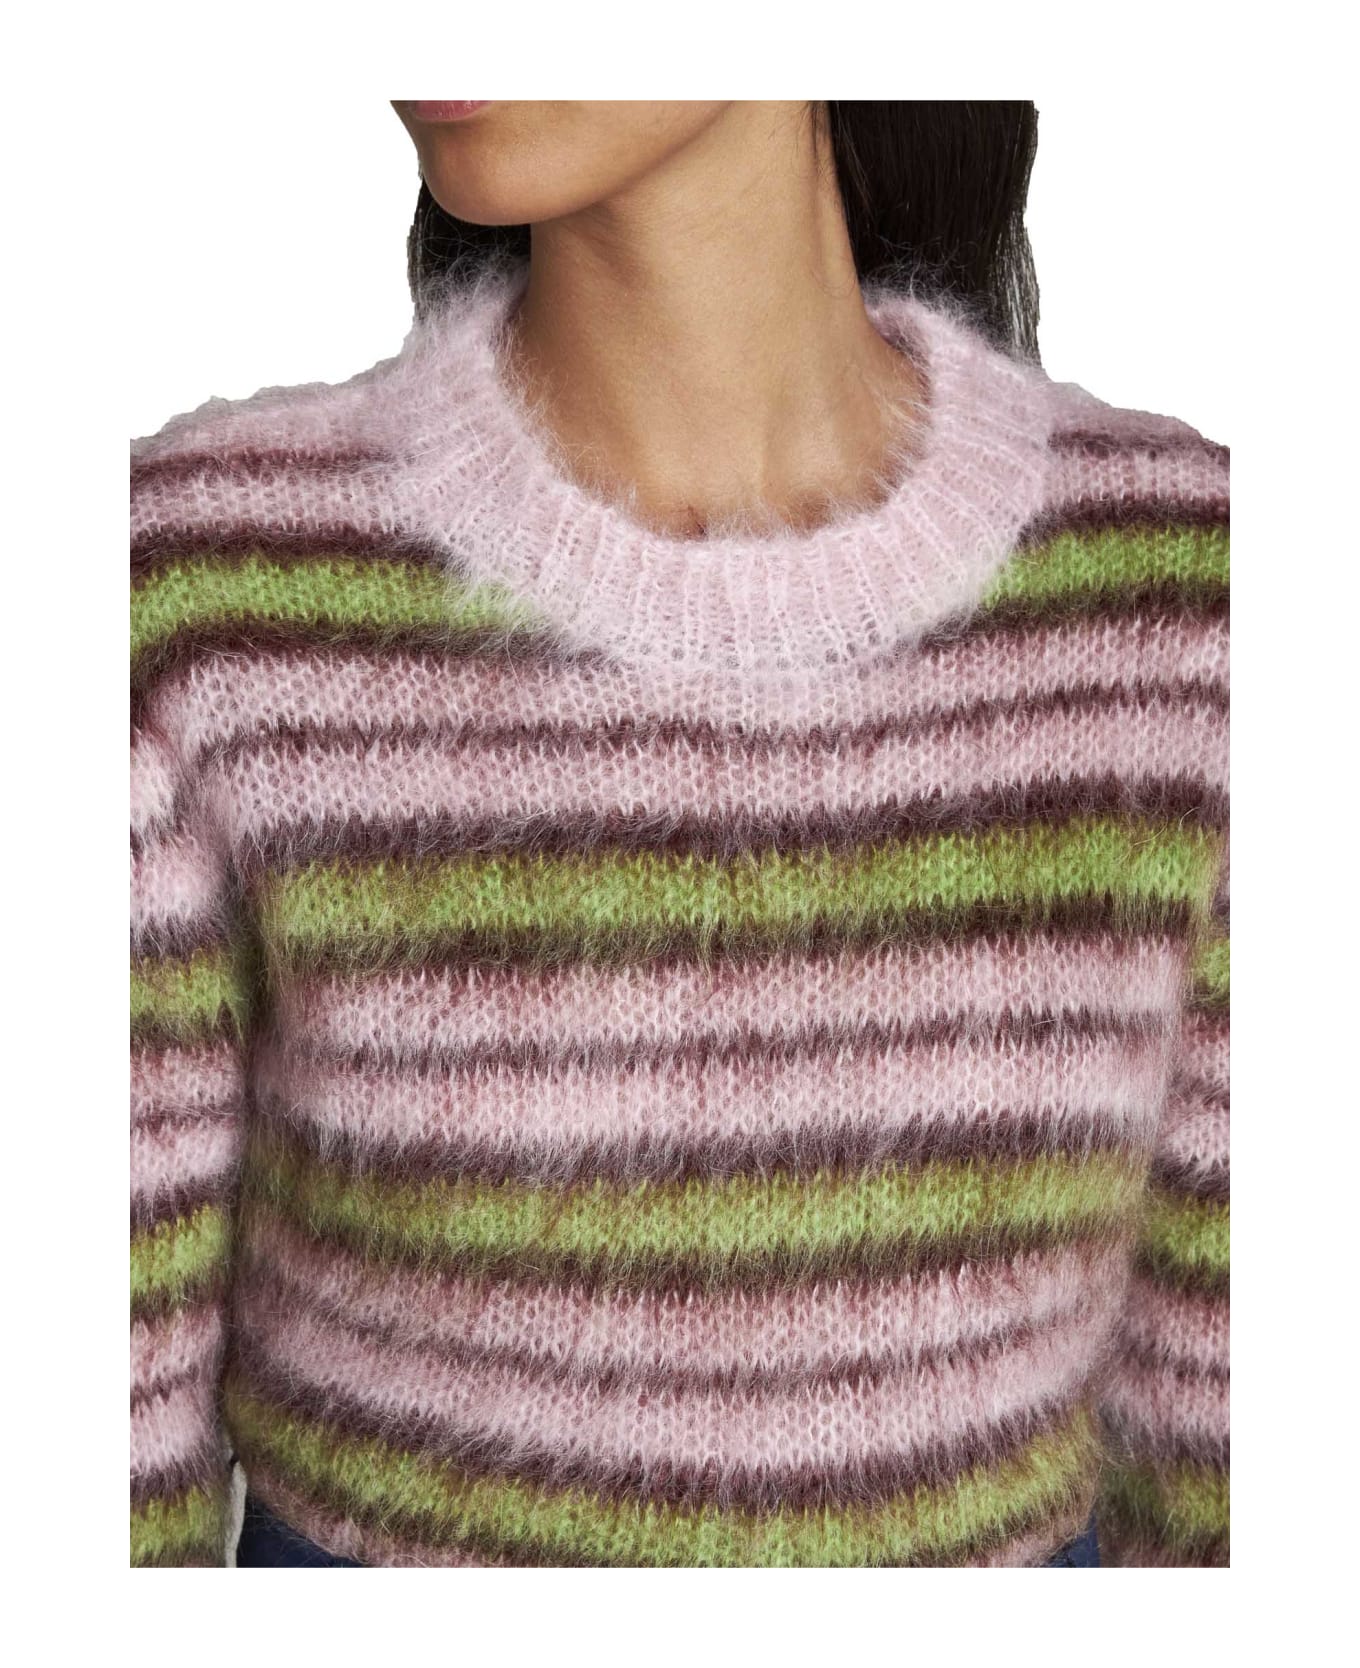 Marni Sweater - Quartz